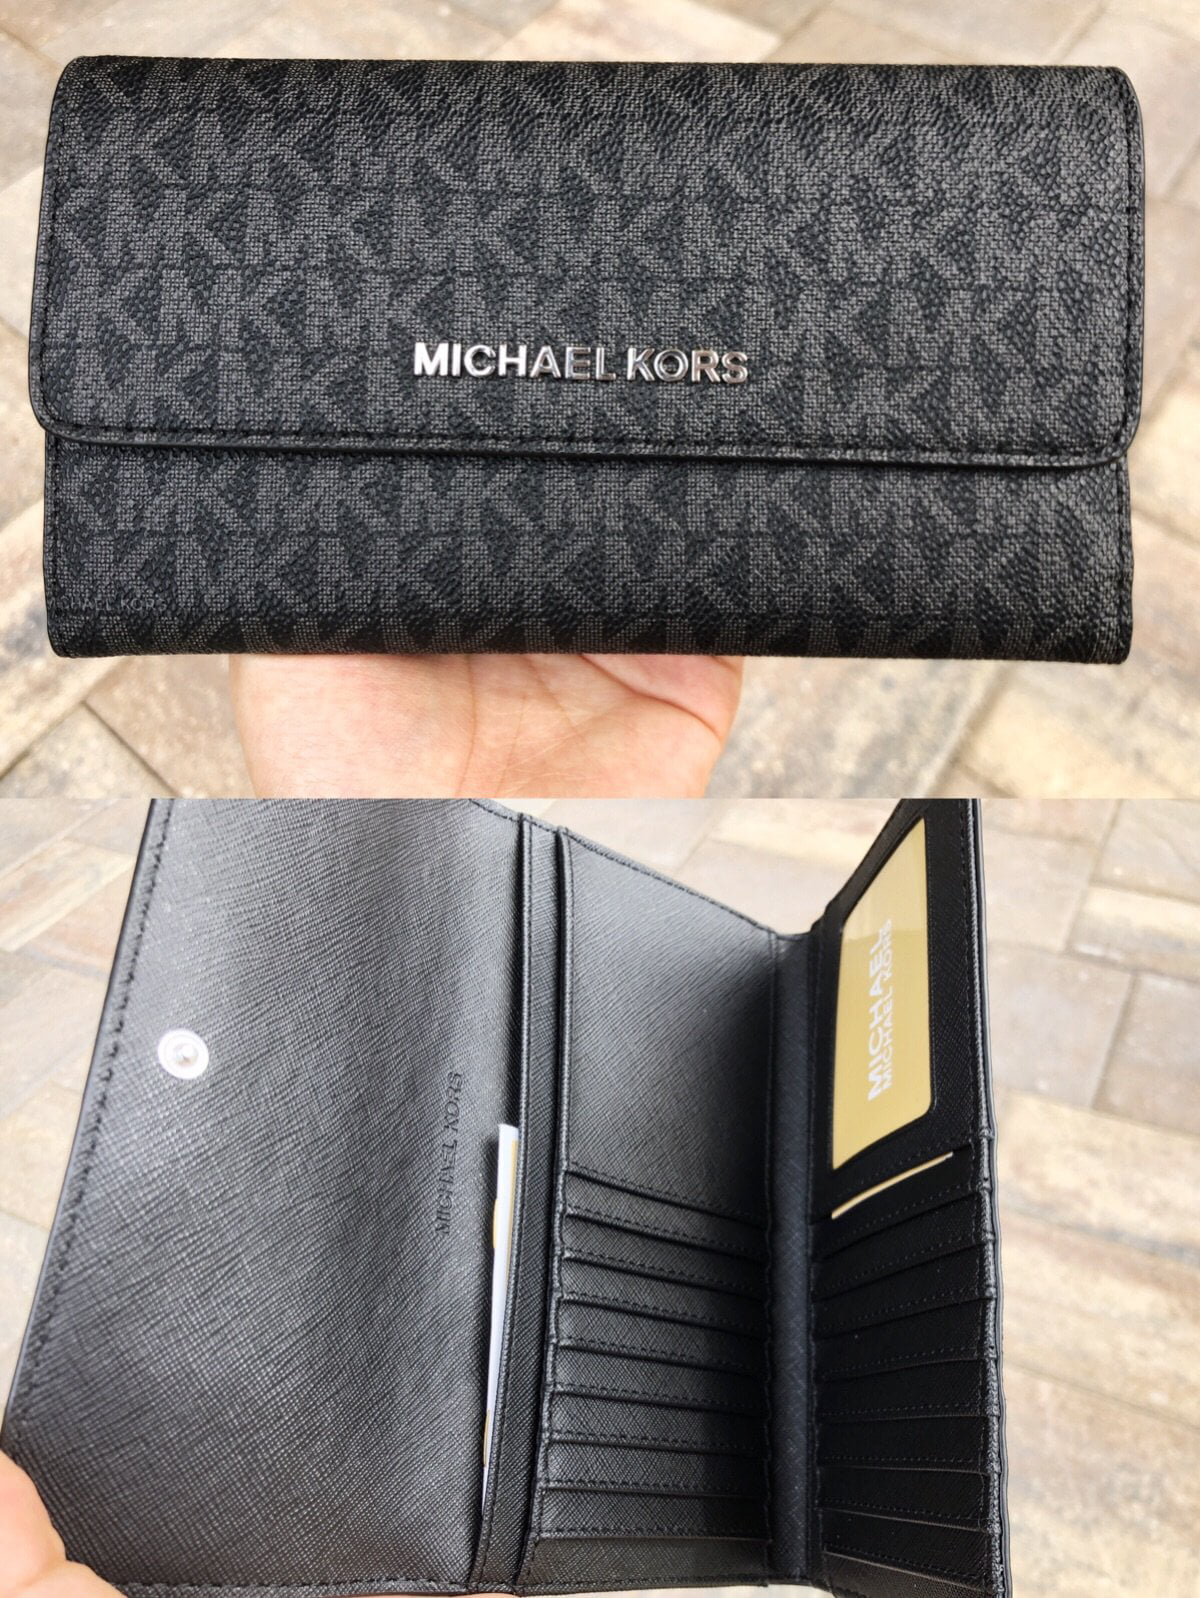 Michael Kors - Michael Kors Jet Set Travel Large Trifold Wallet Black Signature MK - Walmart.com